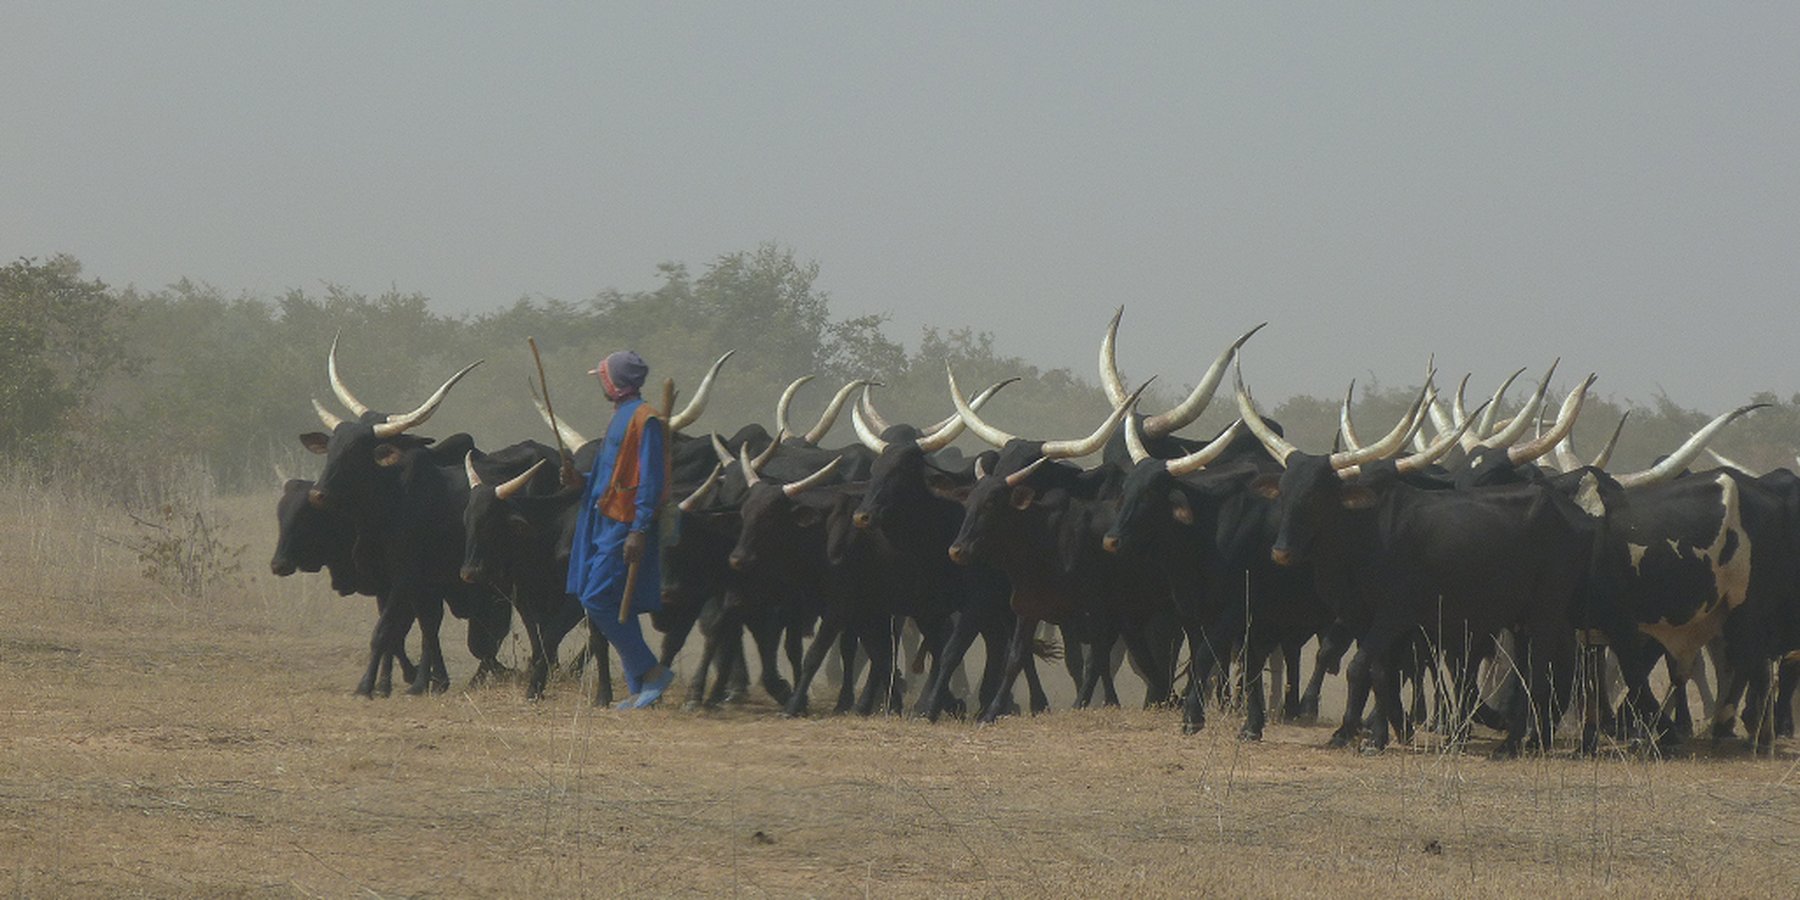 Transhumant livestock keeper in the region of Maradi.